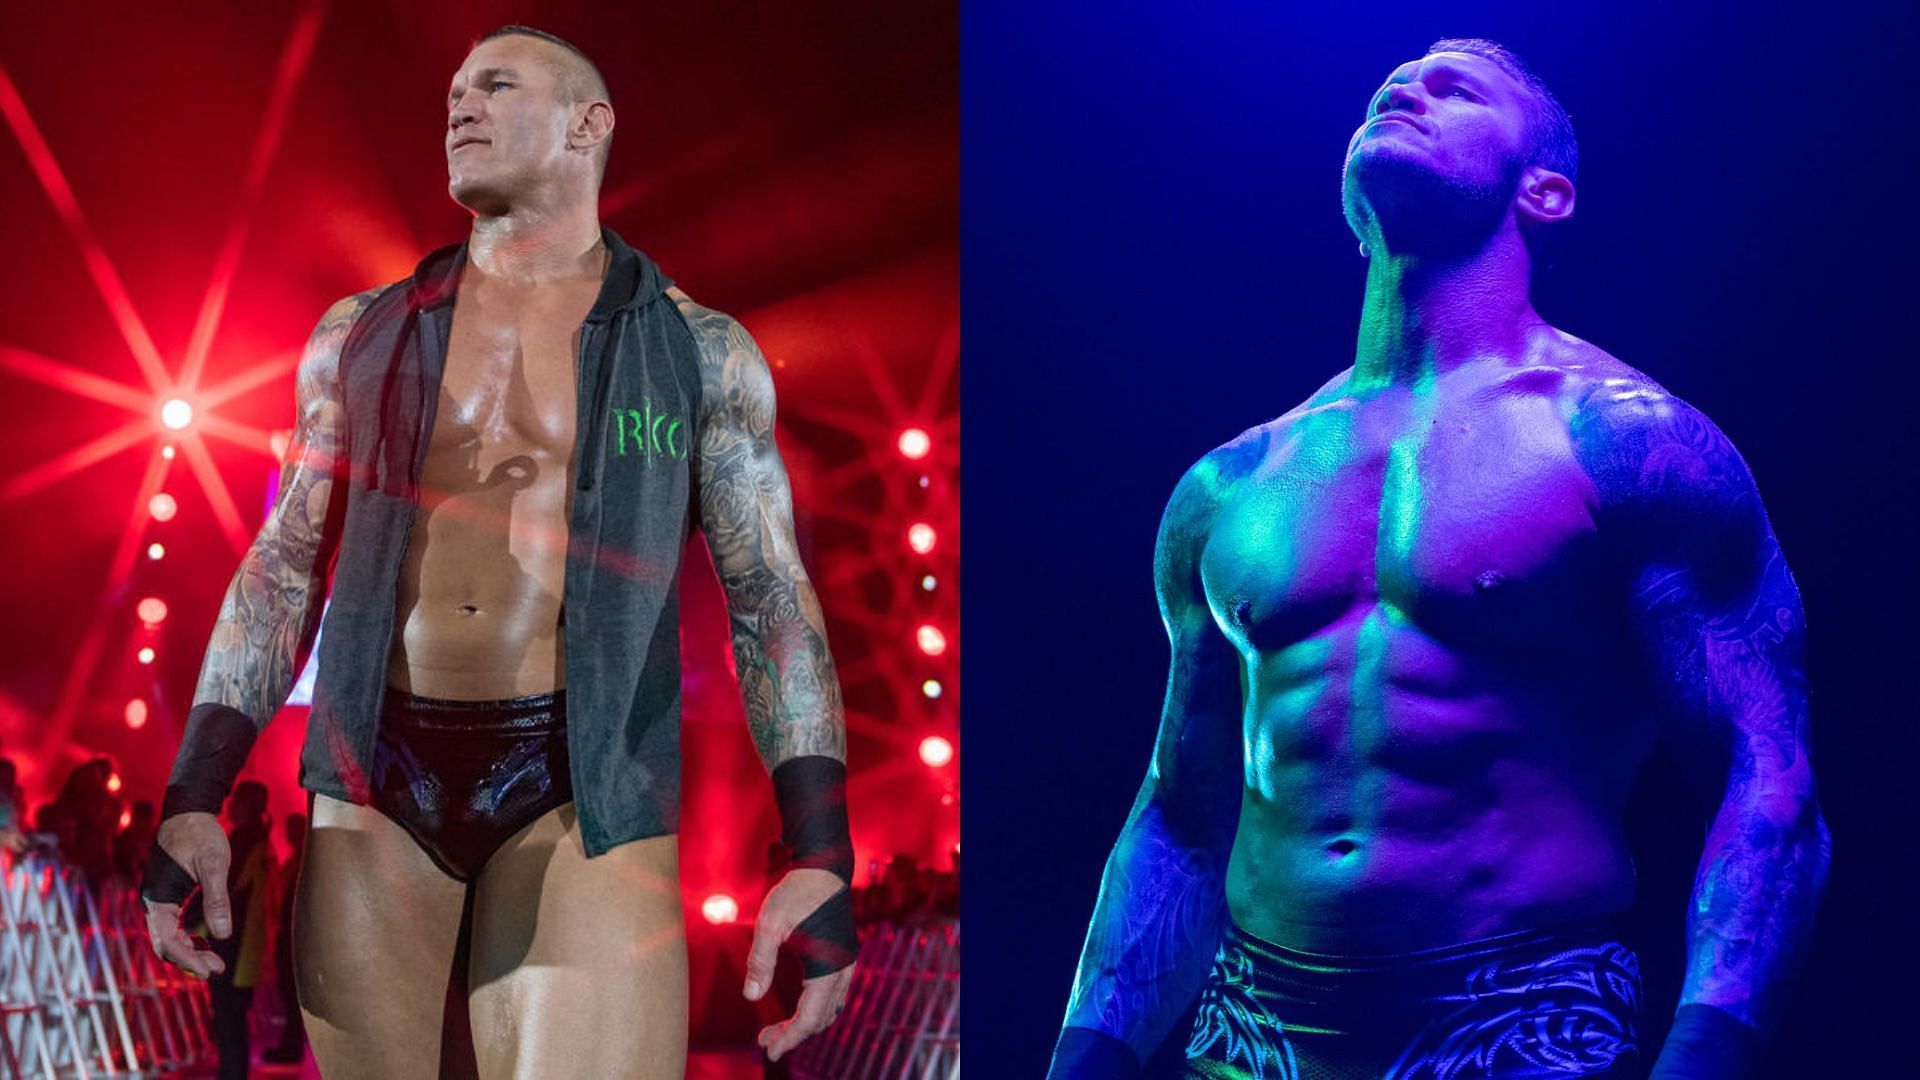 Randy Orton returned at the Survivor Series PLE